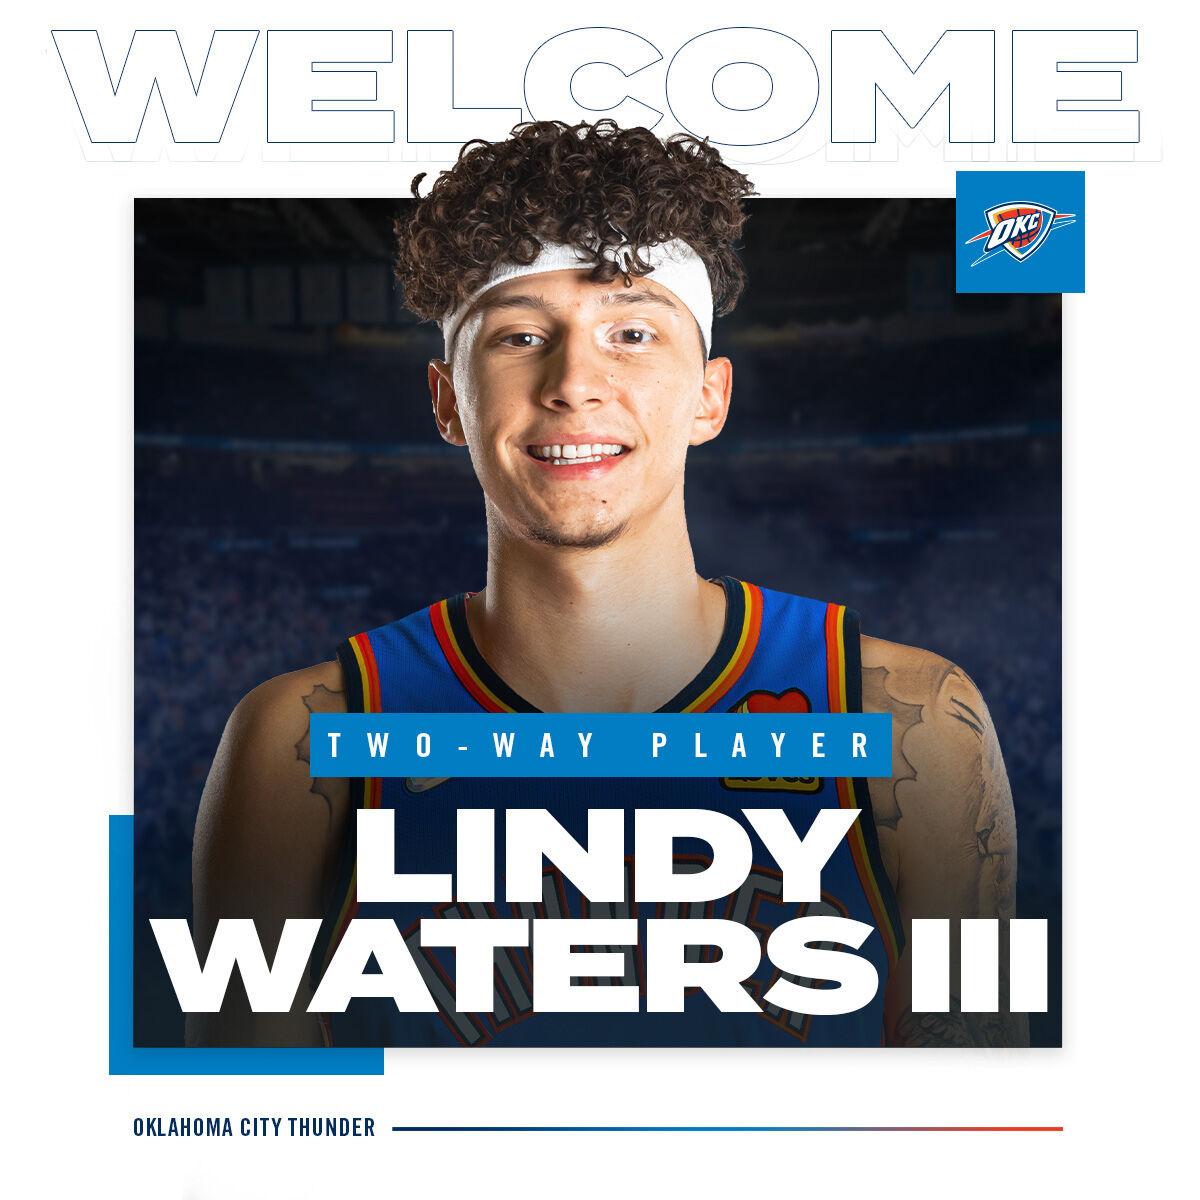 Oklahoma City Thunder forward Lindy Waters III (12) during an NBA